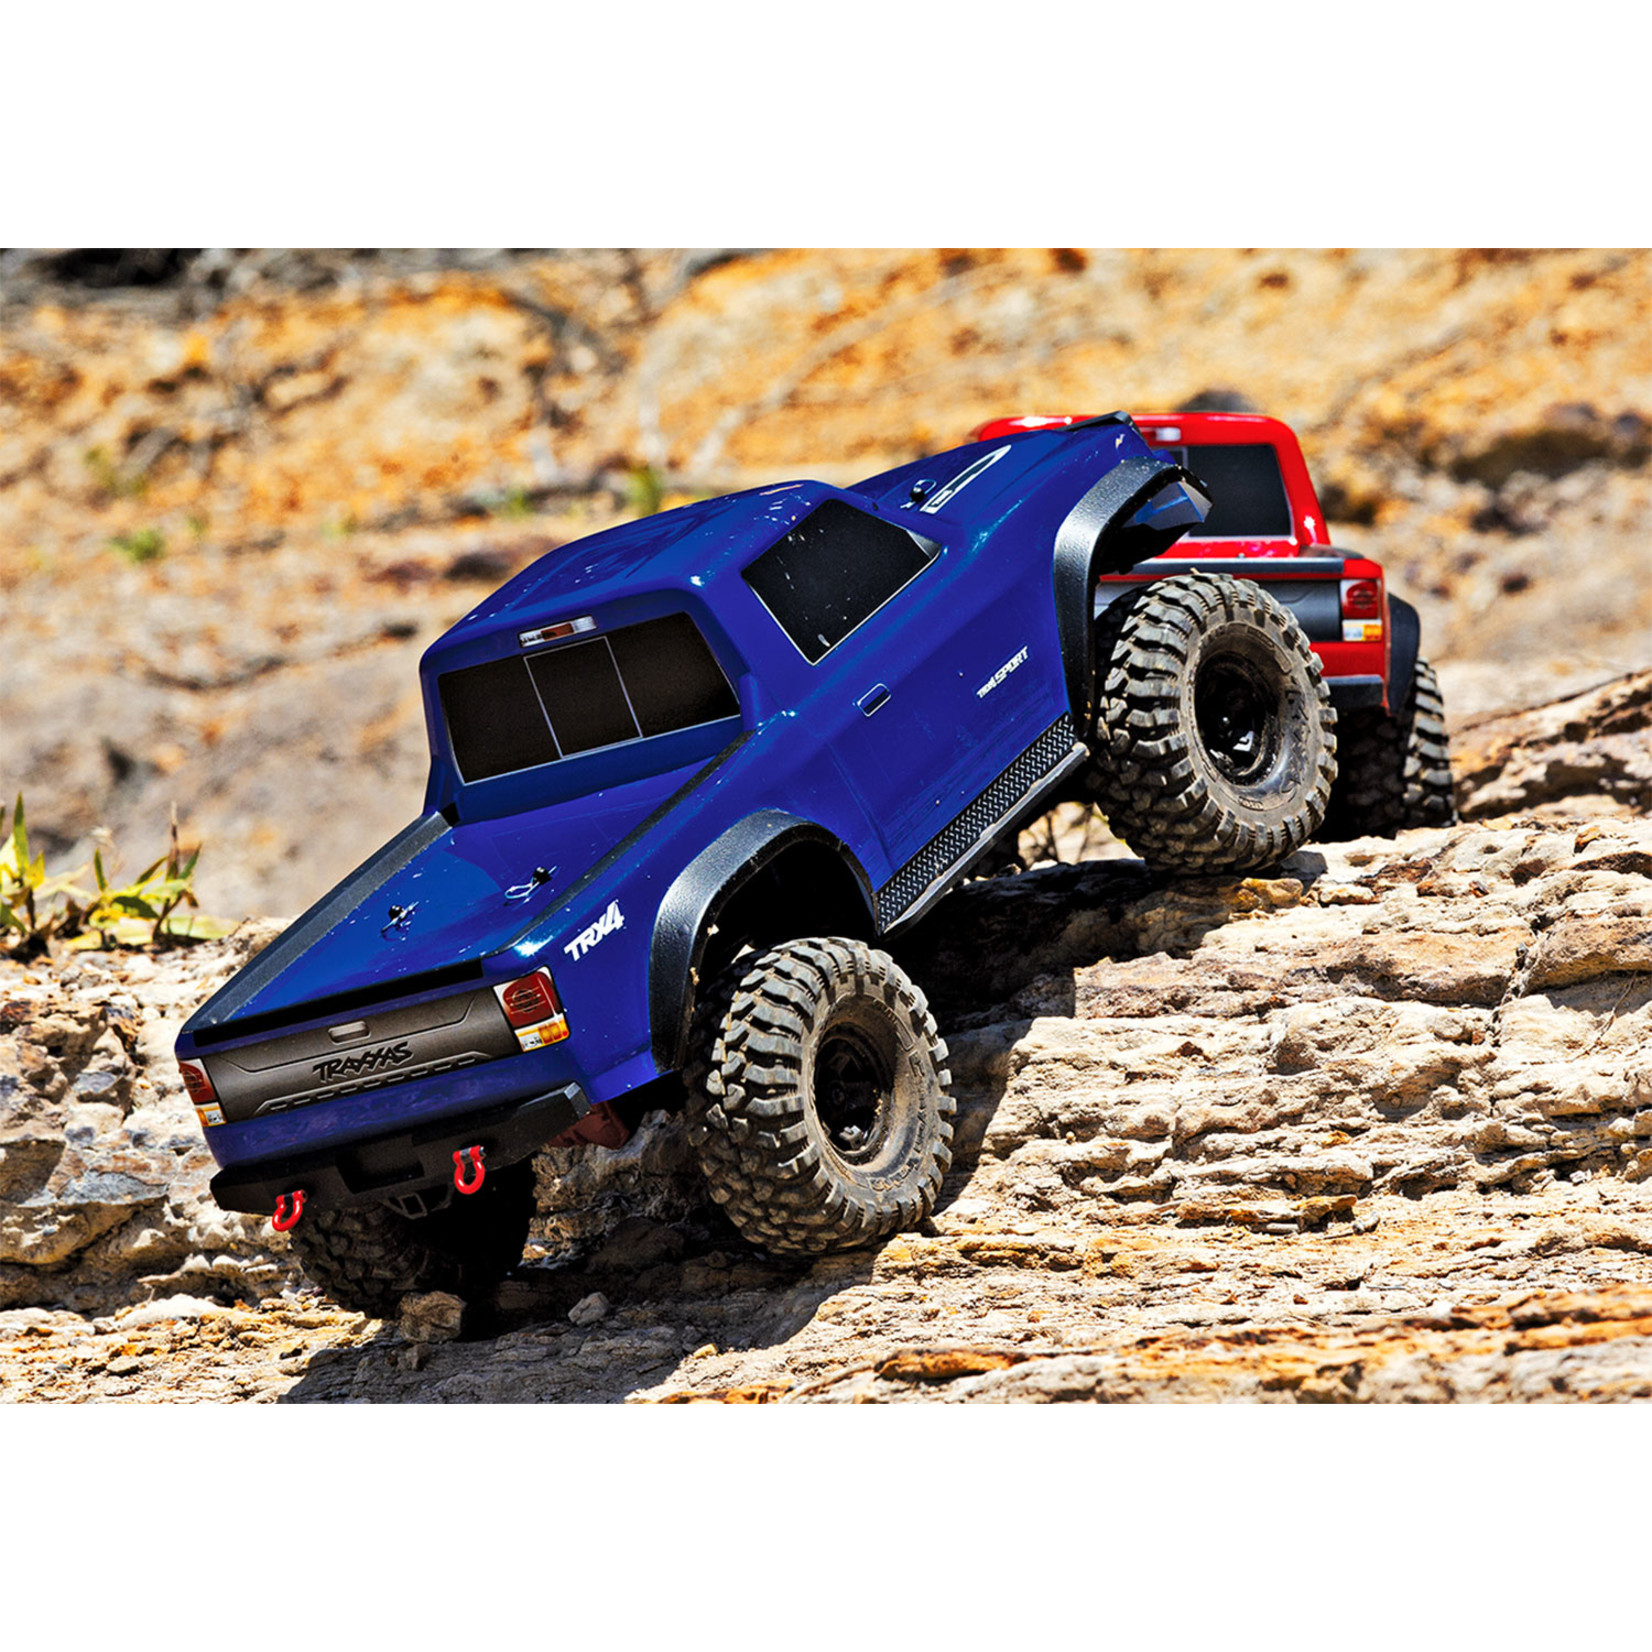 TRX-4 Sport: 1/10 Scale 4x4 Crawler Truck - RC Hobby Shop